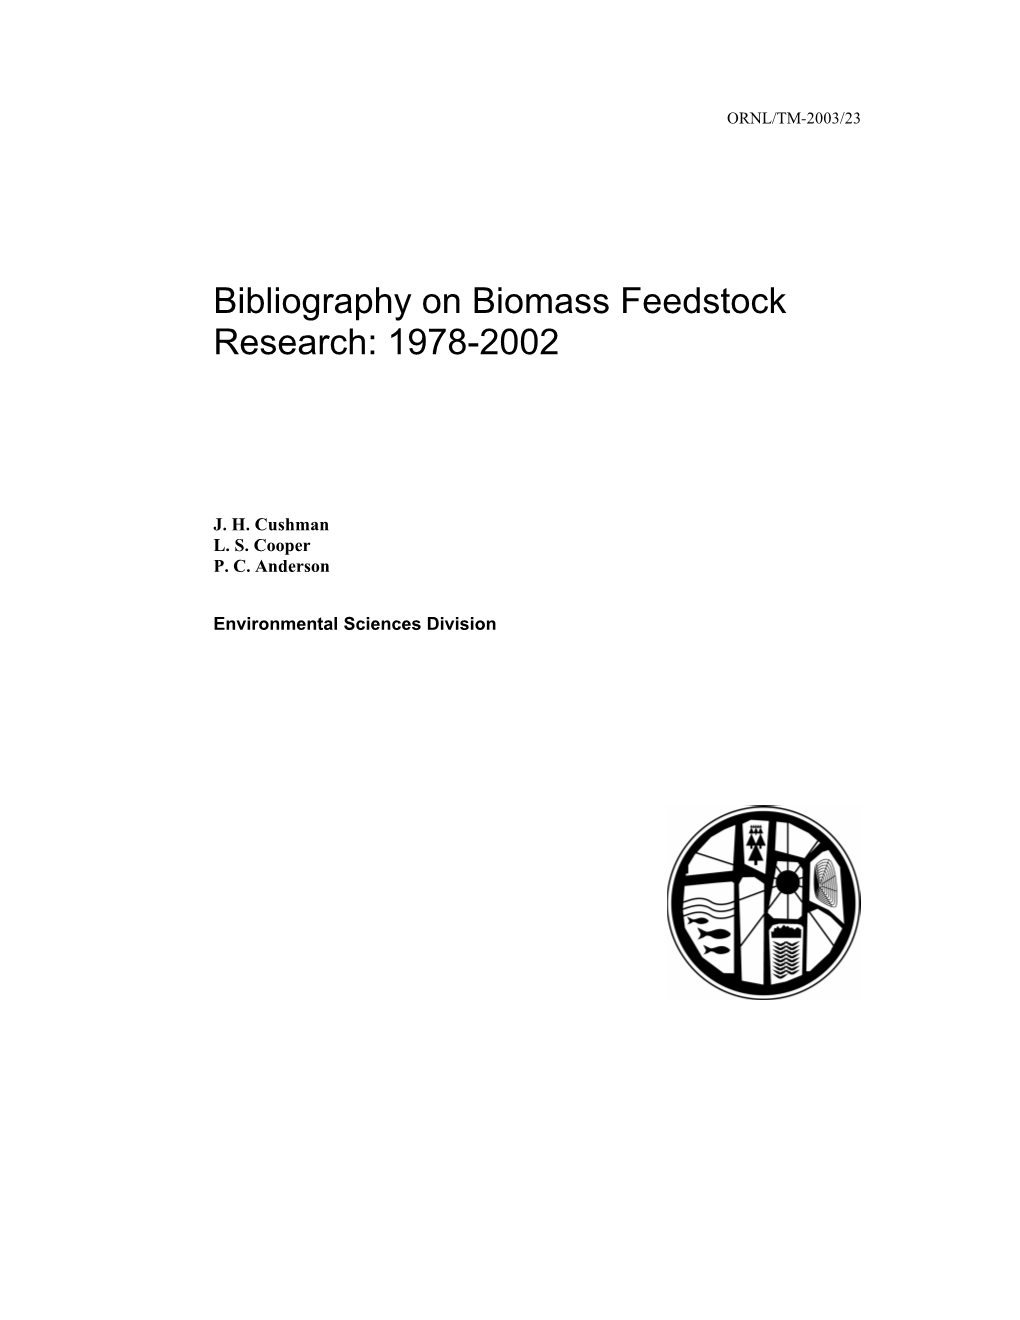 BFDP Bibliography 2003